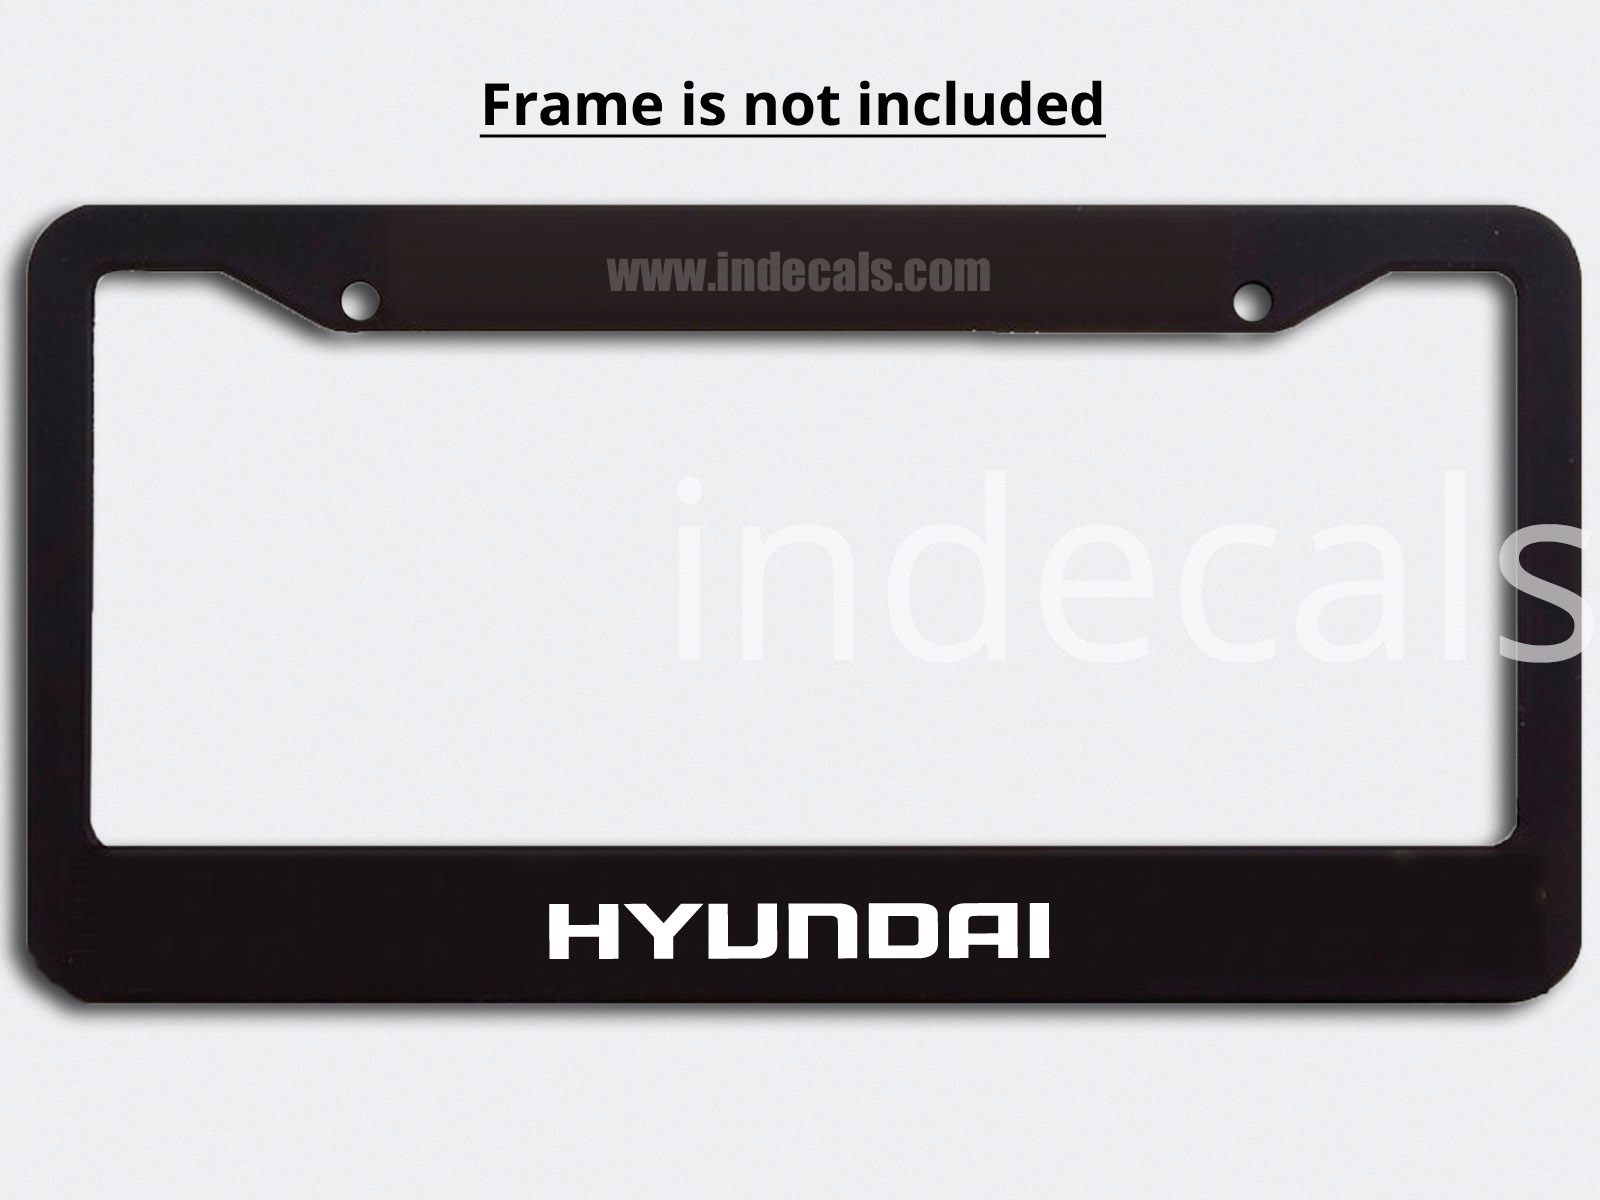 3 x Hyundai Stickers for Plate Frame - White